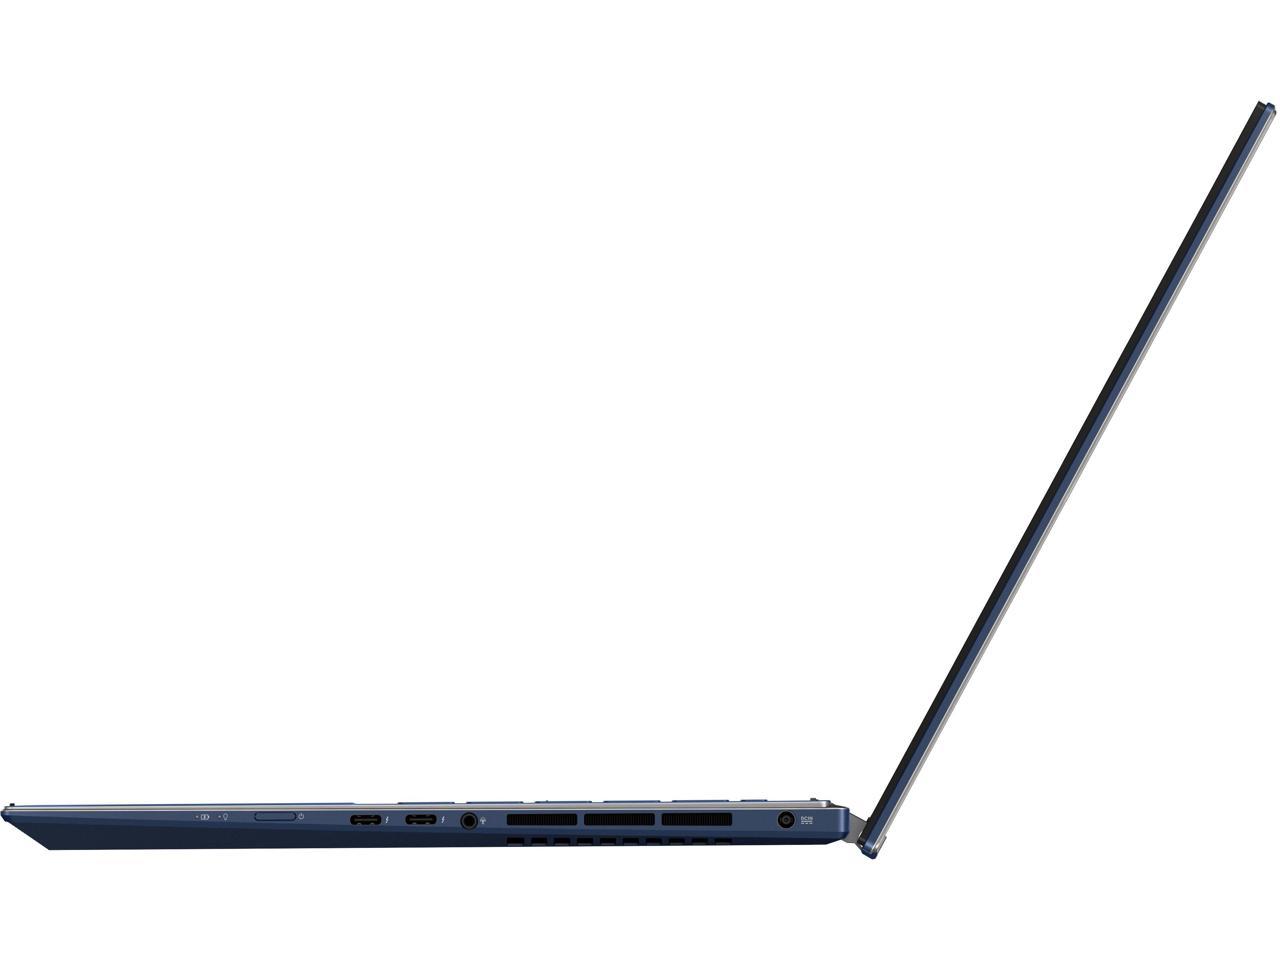 Asus Zenbook Flip 2 In 1 156 Oled Touch Screen Laptop Intel Evo Core I7 Intel Arc 5529